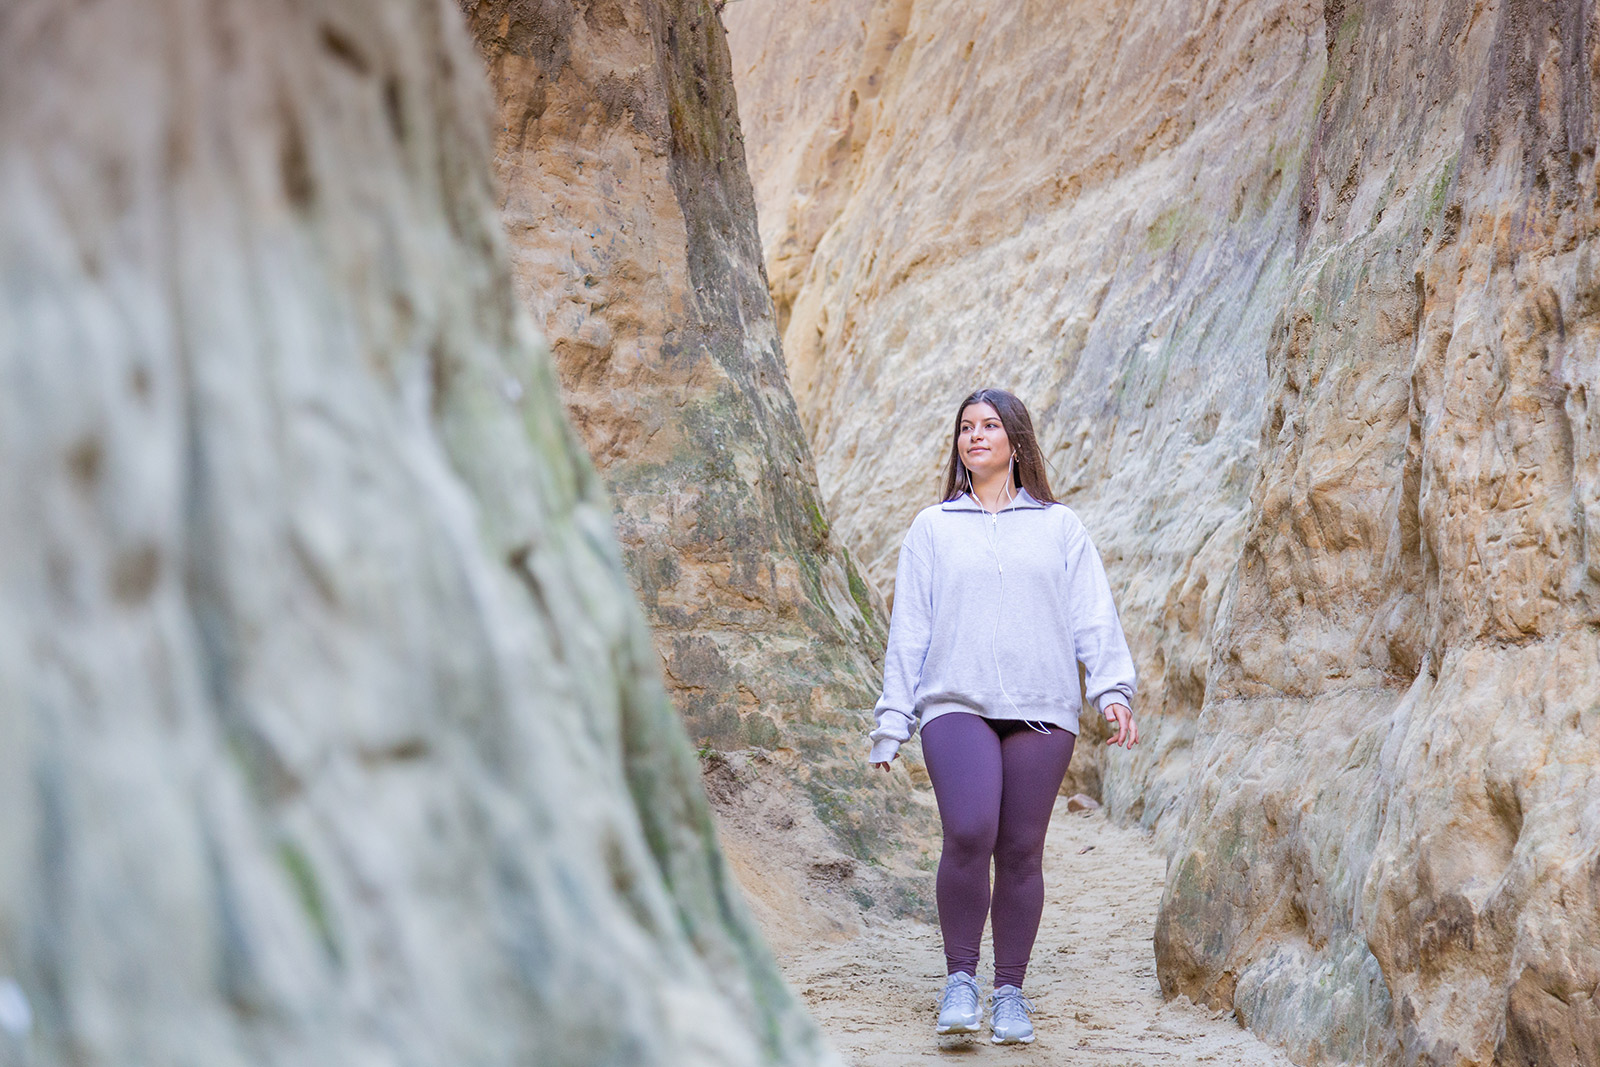 Woman walking through sandstone walled slot canyon